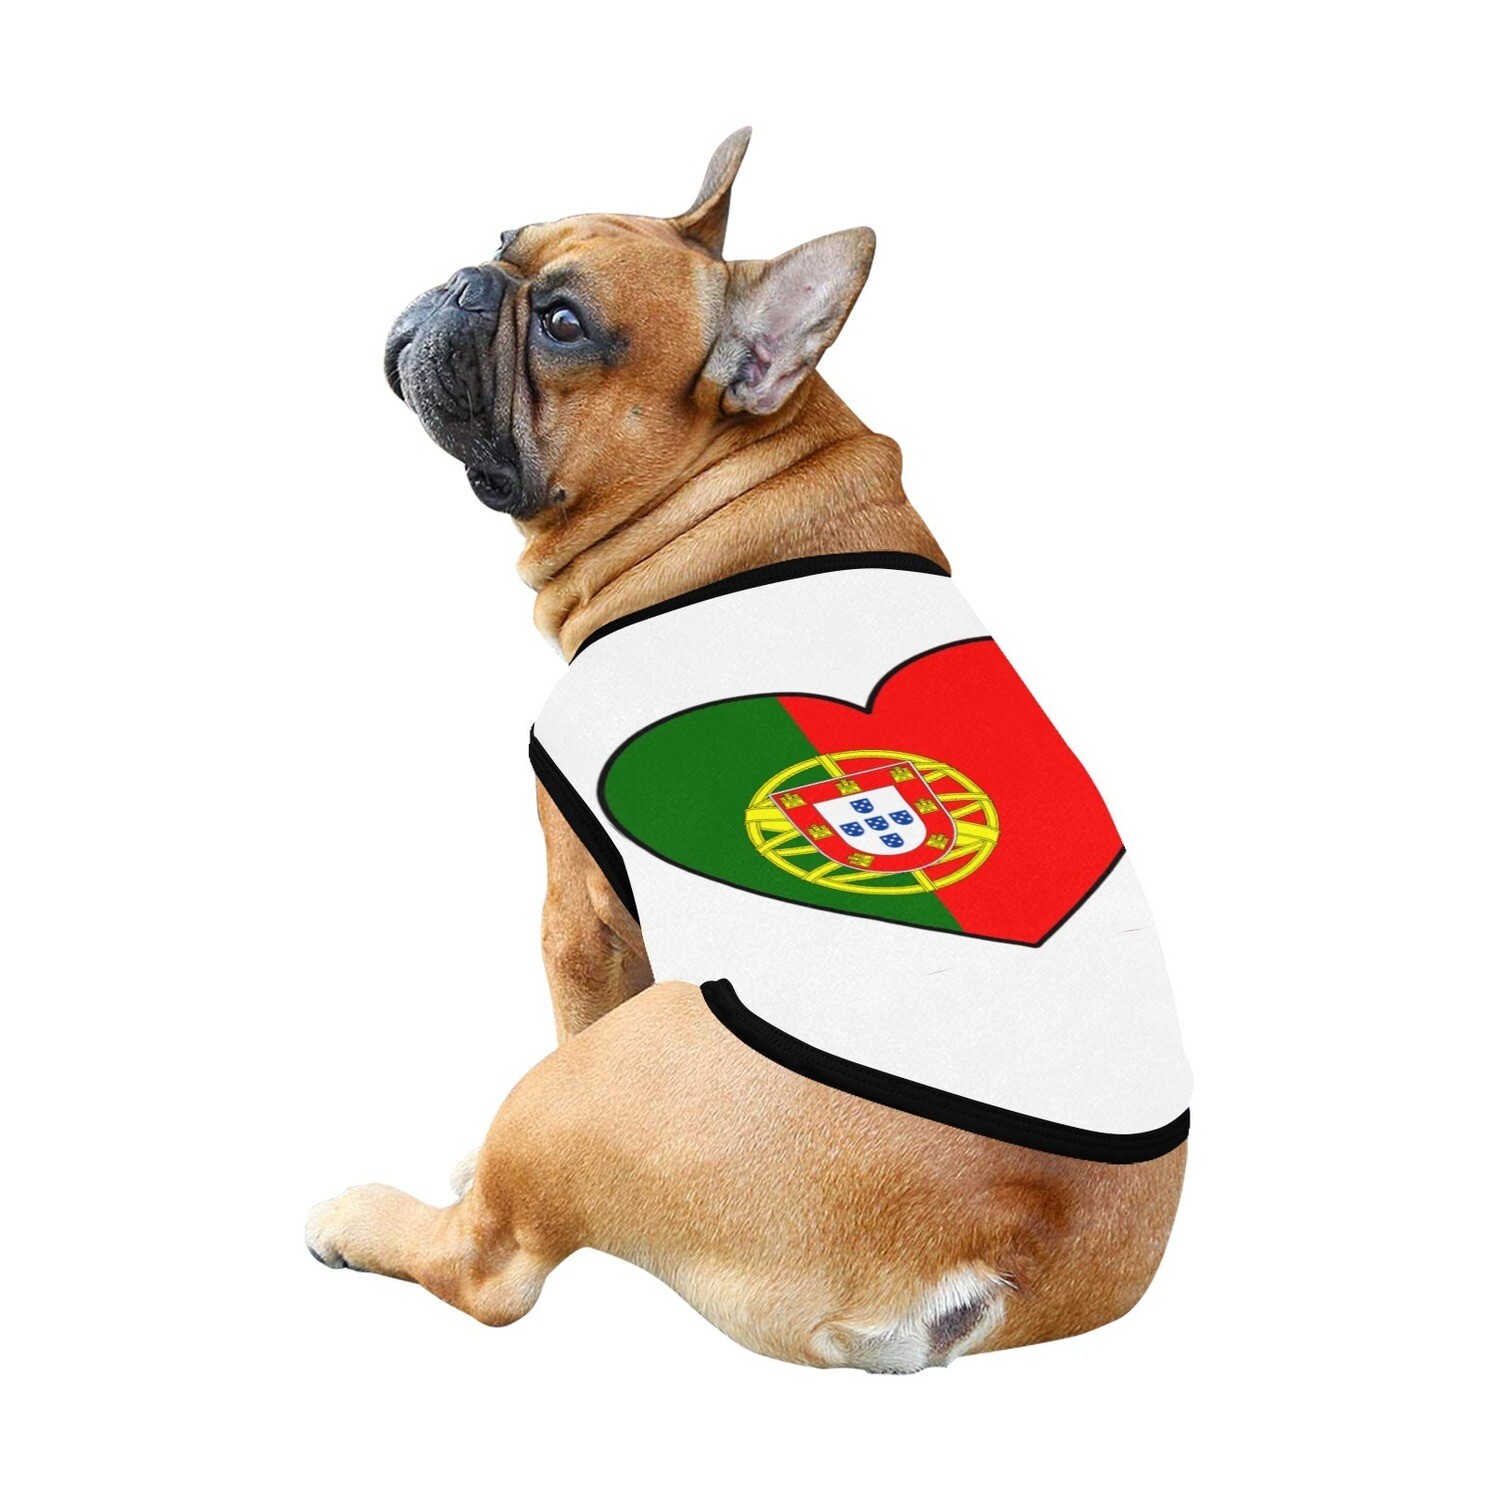 🐕🇵🇹 I love Portugal, Portuguese flag, dog t-shirt, dog gift, dog tank top, dog shirt, dog clothes, gift, 7 sizes XS to 3XL, heart shape, white